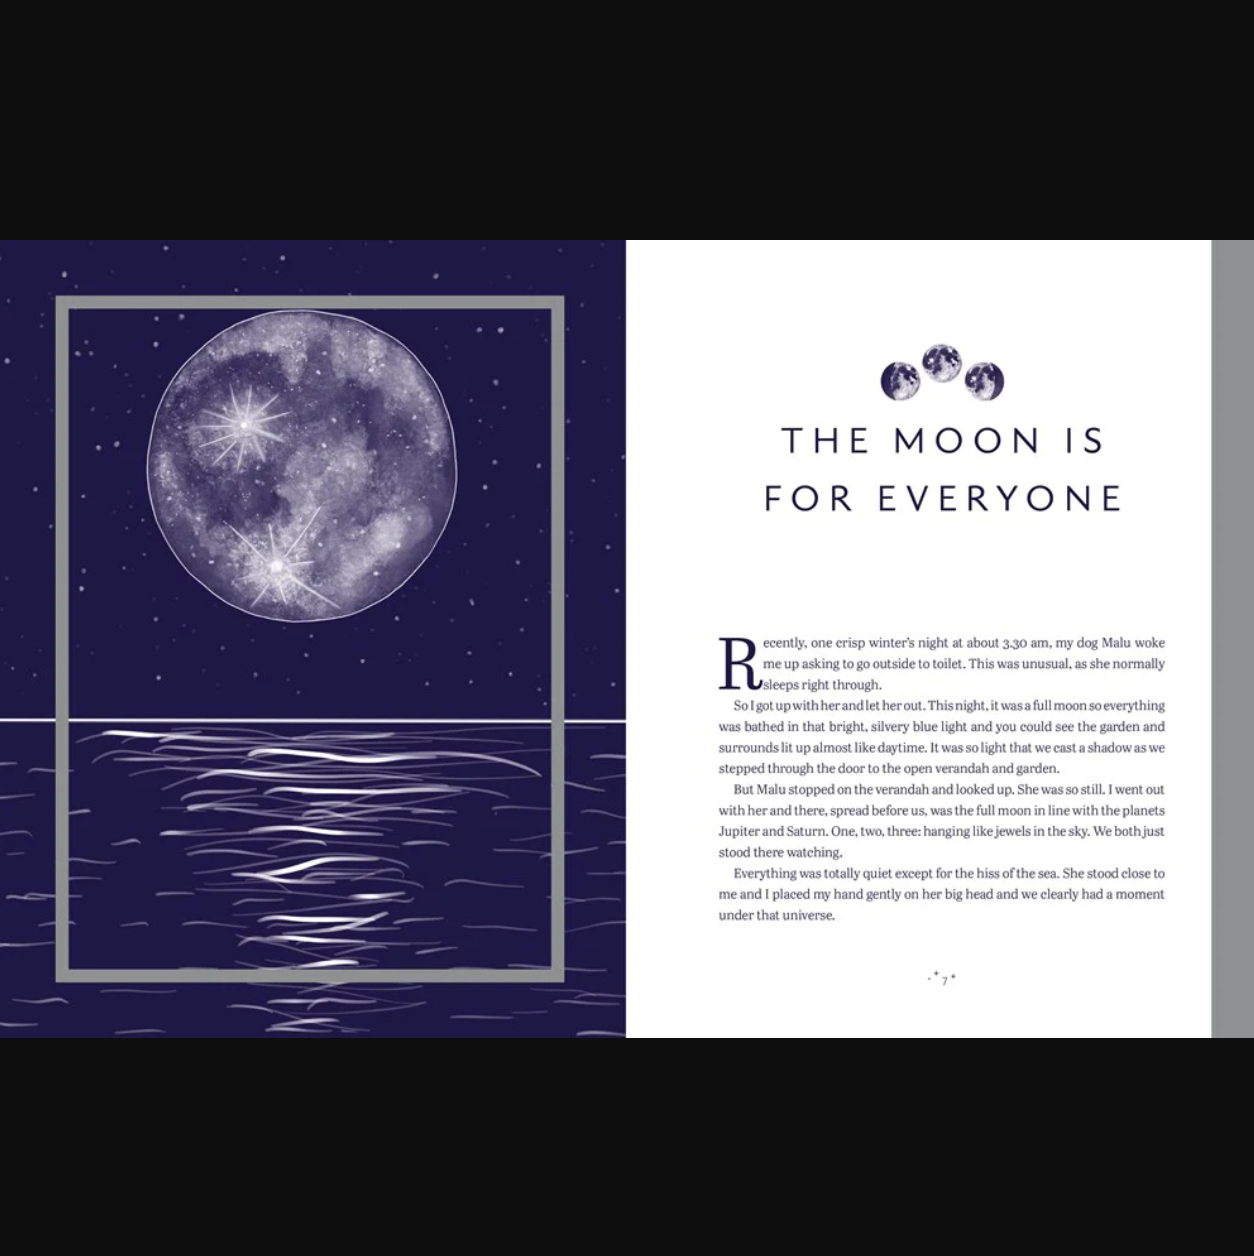 The Enchanted Moon - Book